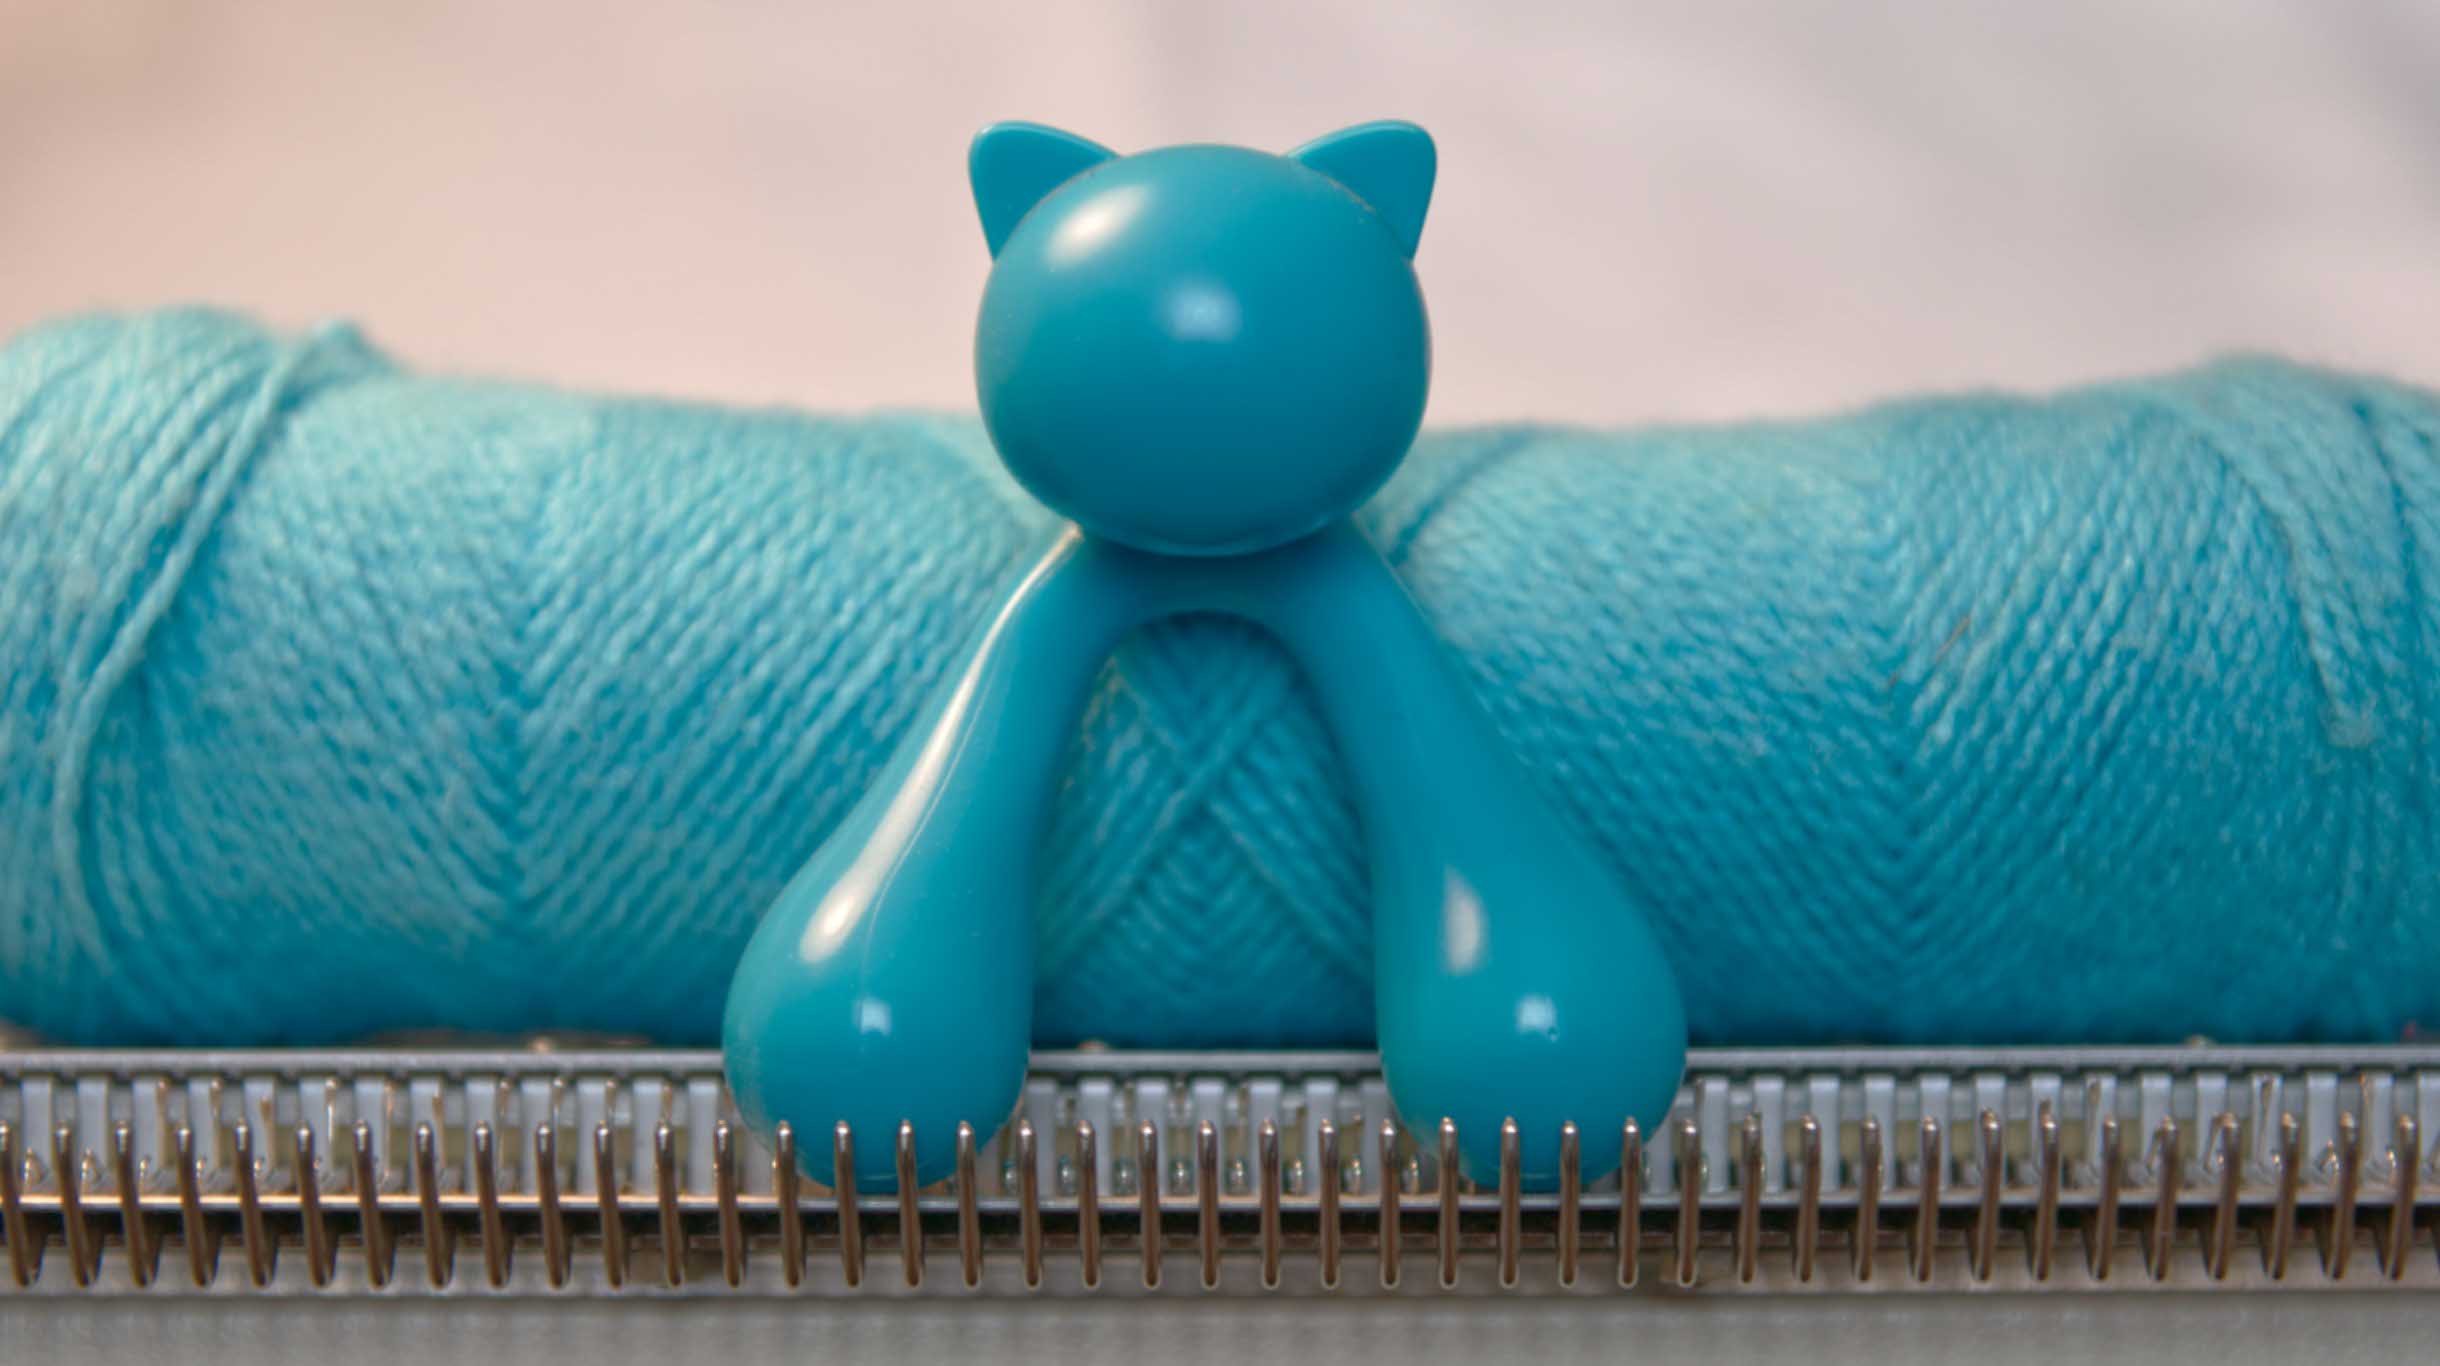 Image: blue cat on yarn